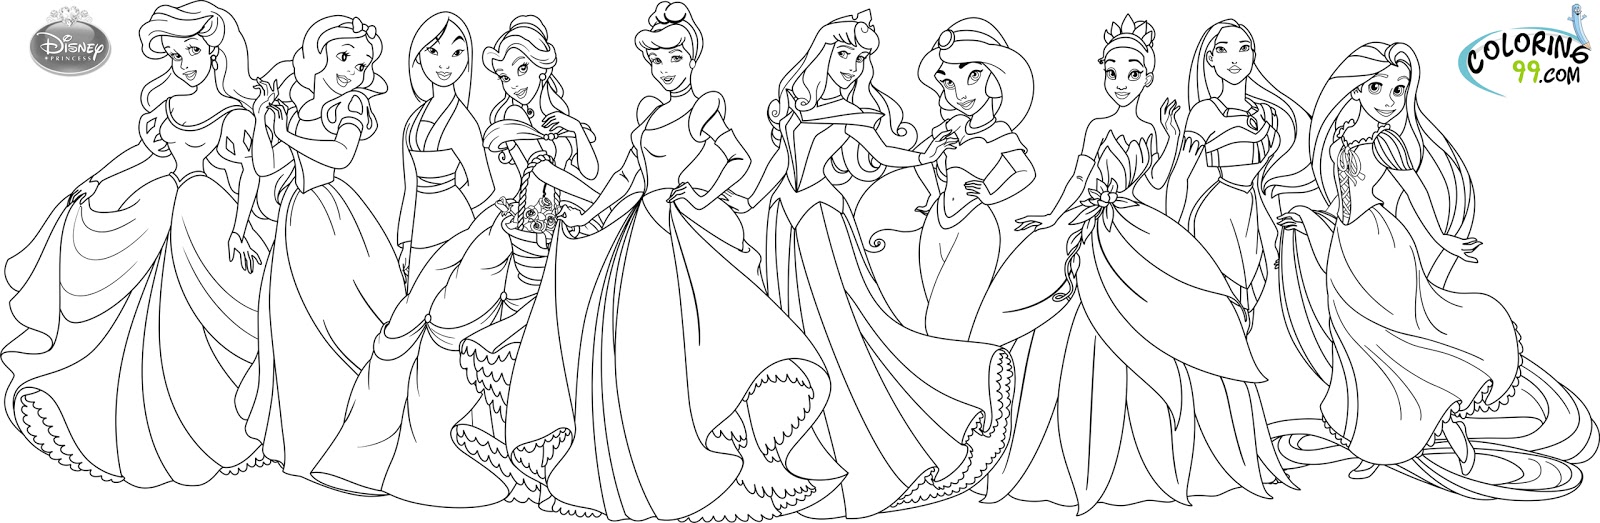 Disney Princess Coloring Pages | Team colors